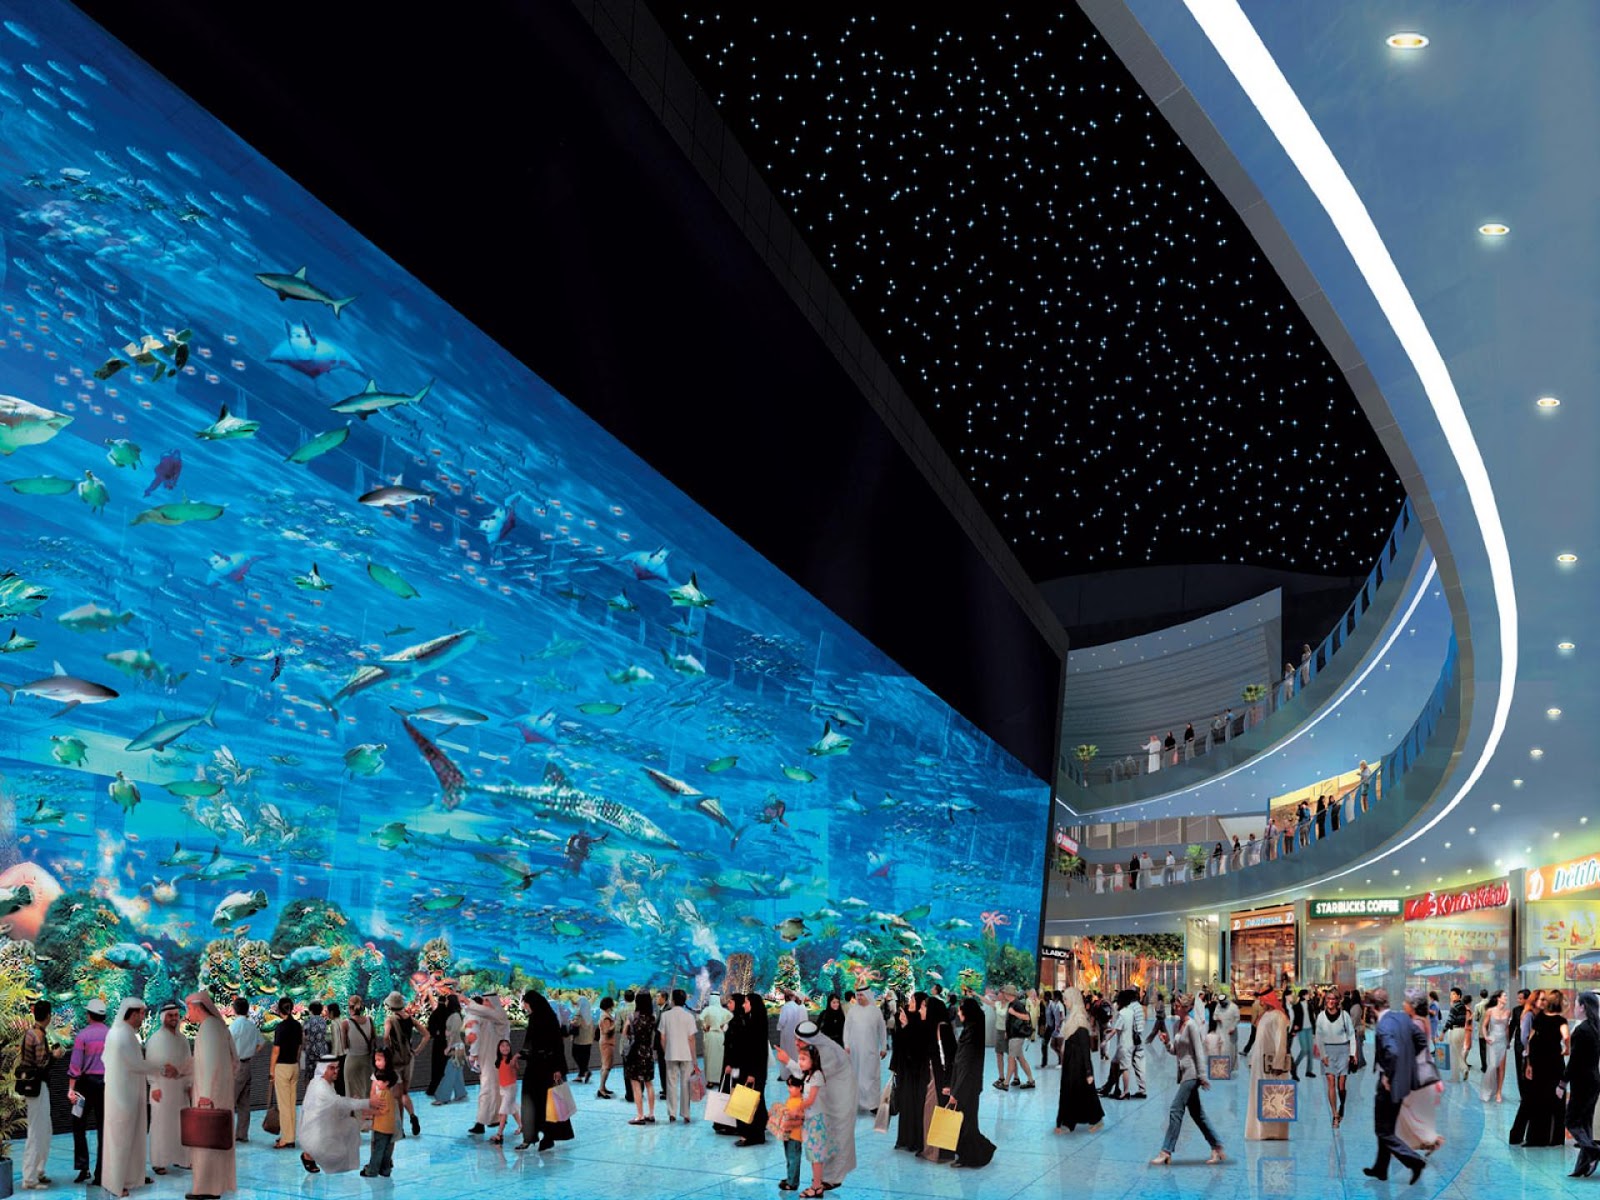 https://blogger.googleusercontent.com/img/b/R29vZ2xl/AVvXsEiyYWCyj4NT96VXlf5f35sCFN4KwMqbYvQ7ylqdV3EF6EzbDqcgG3W8usGFa8WMLpWdG3aMdme5twfEw6FCKrlkRGN1fPlhW28N_K6_ROdVeXLAaYCJQaQCv7c26AOKV1D6nZyu5bCAMIMn/s1600/Dubai-Mall-Aquarium-2013-HD-Wallpaper.jpg